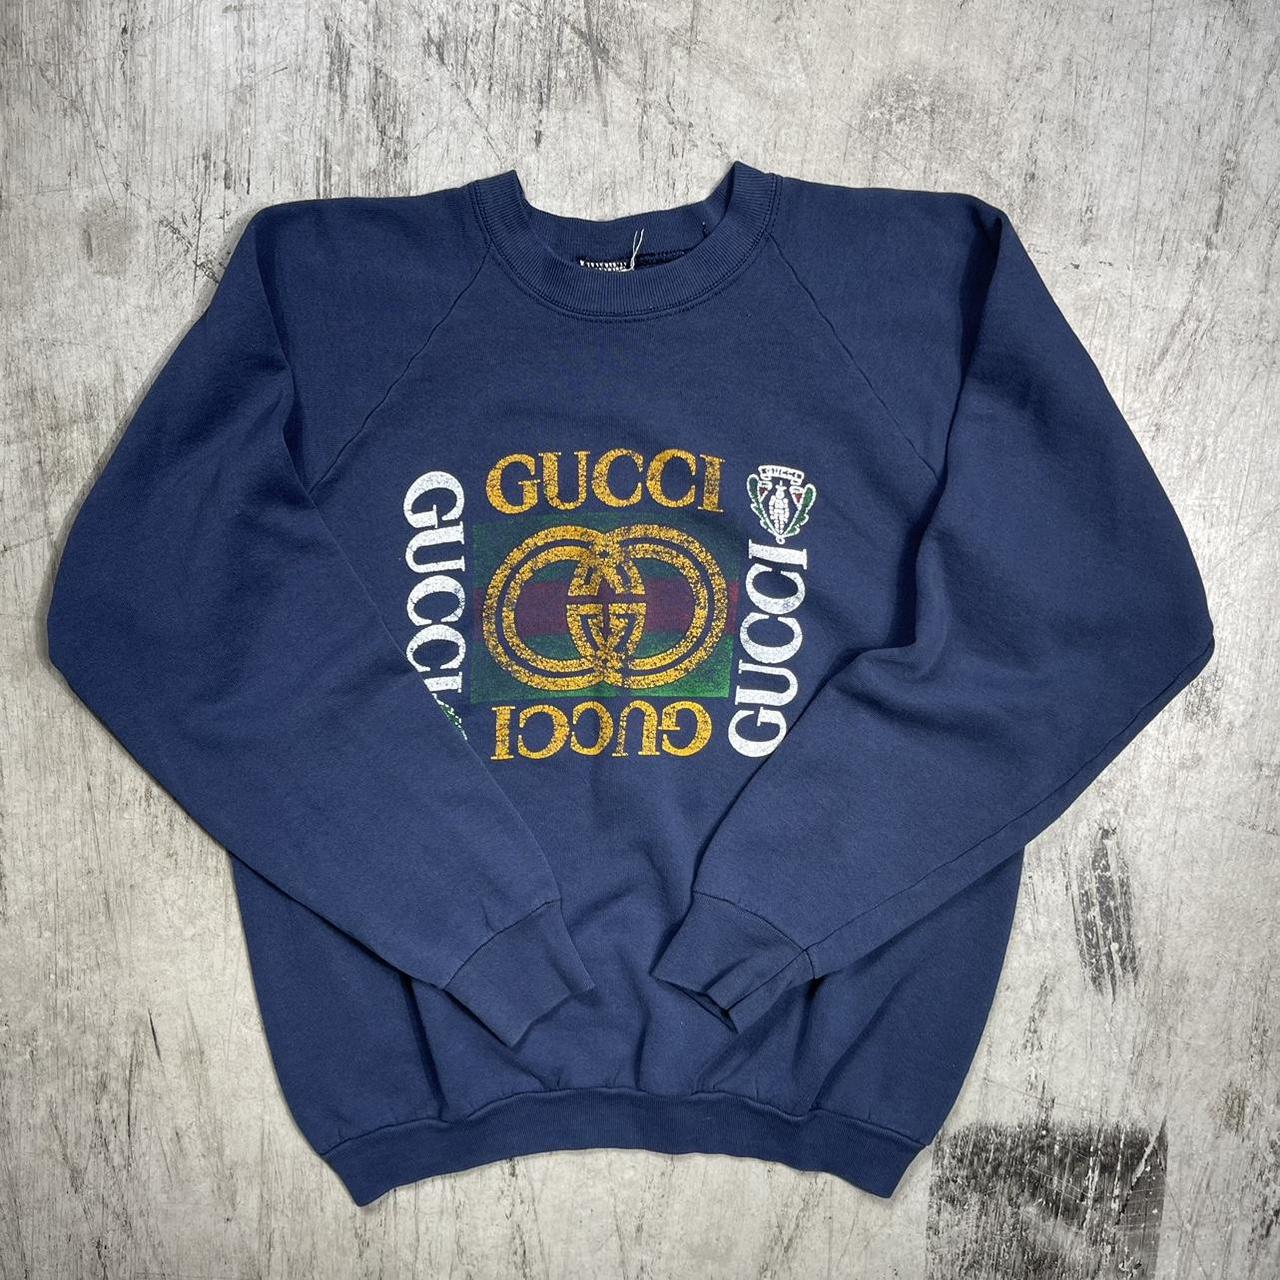 Gucci Men's Navy and Yellow Sweatshirt